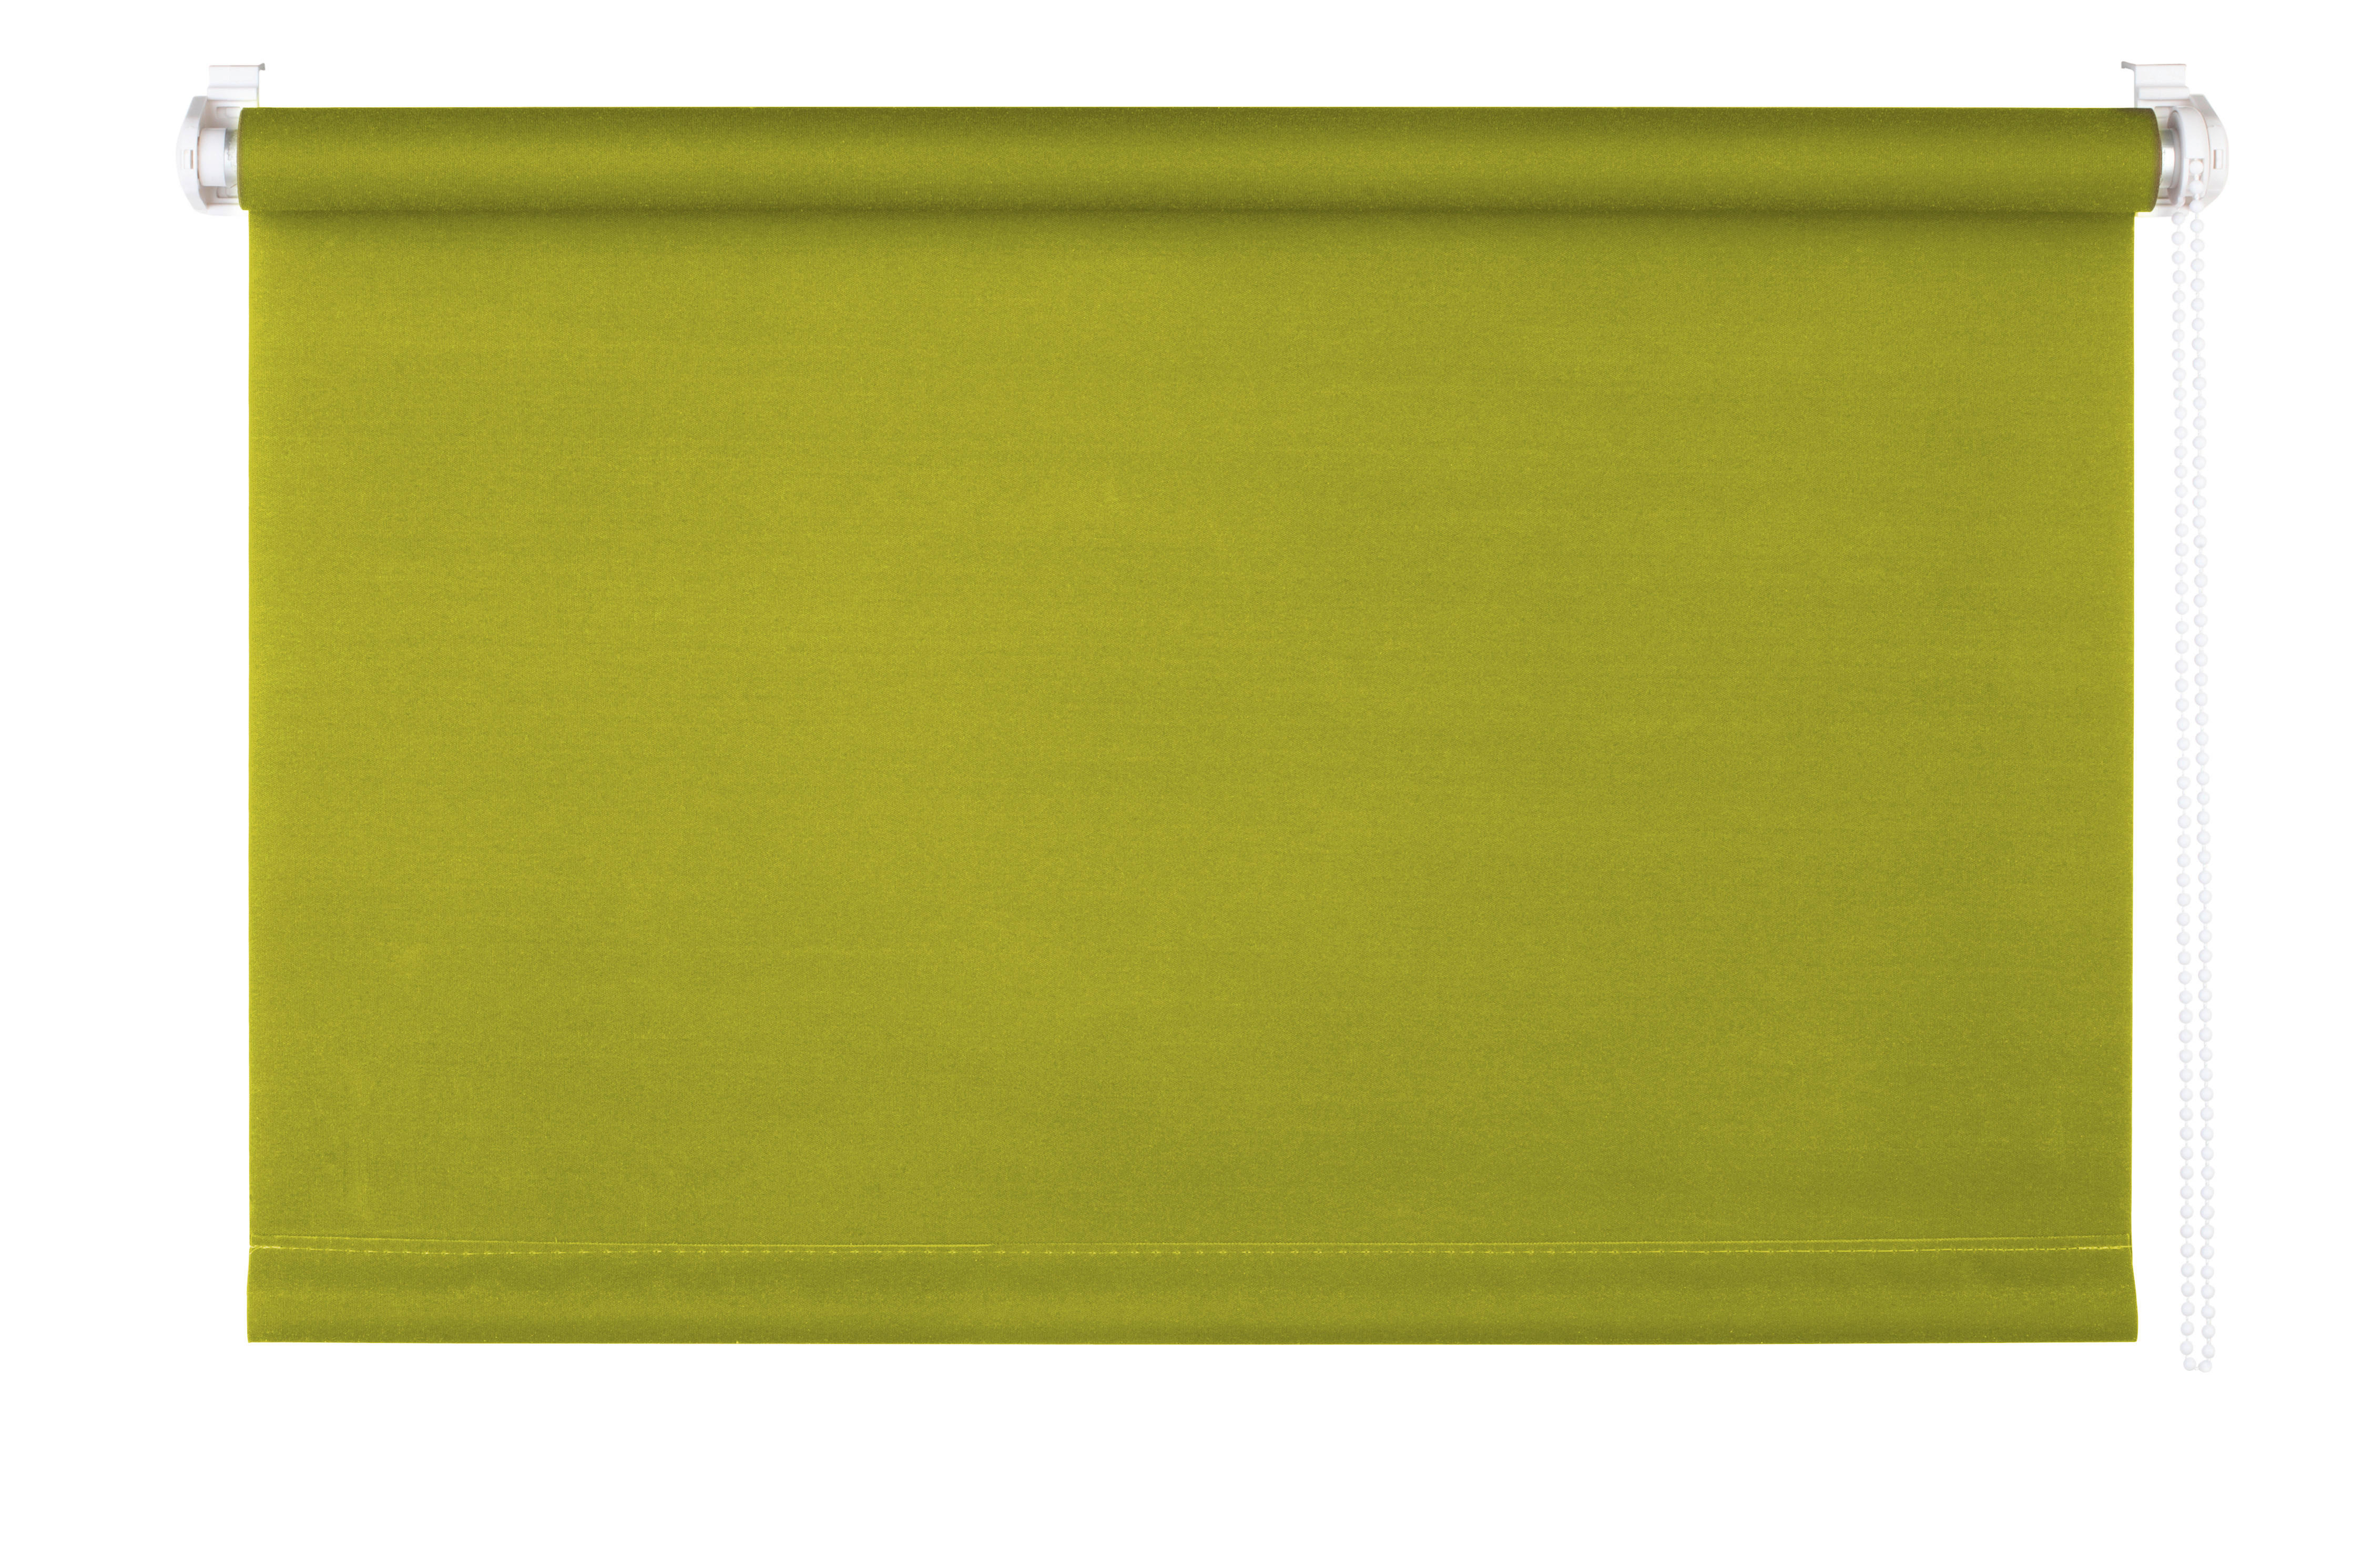 ROLO ZAVJESA zelena, plastika - zelena, Basics, plastika (100/160cm) - Homeware